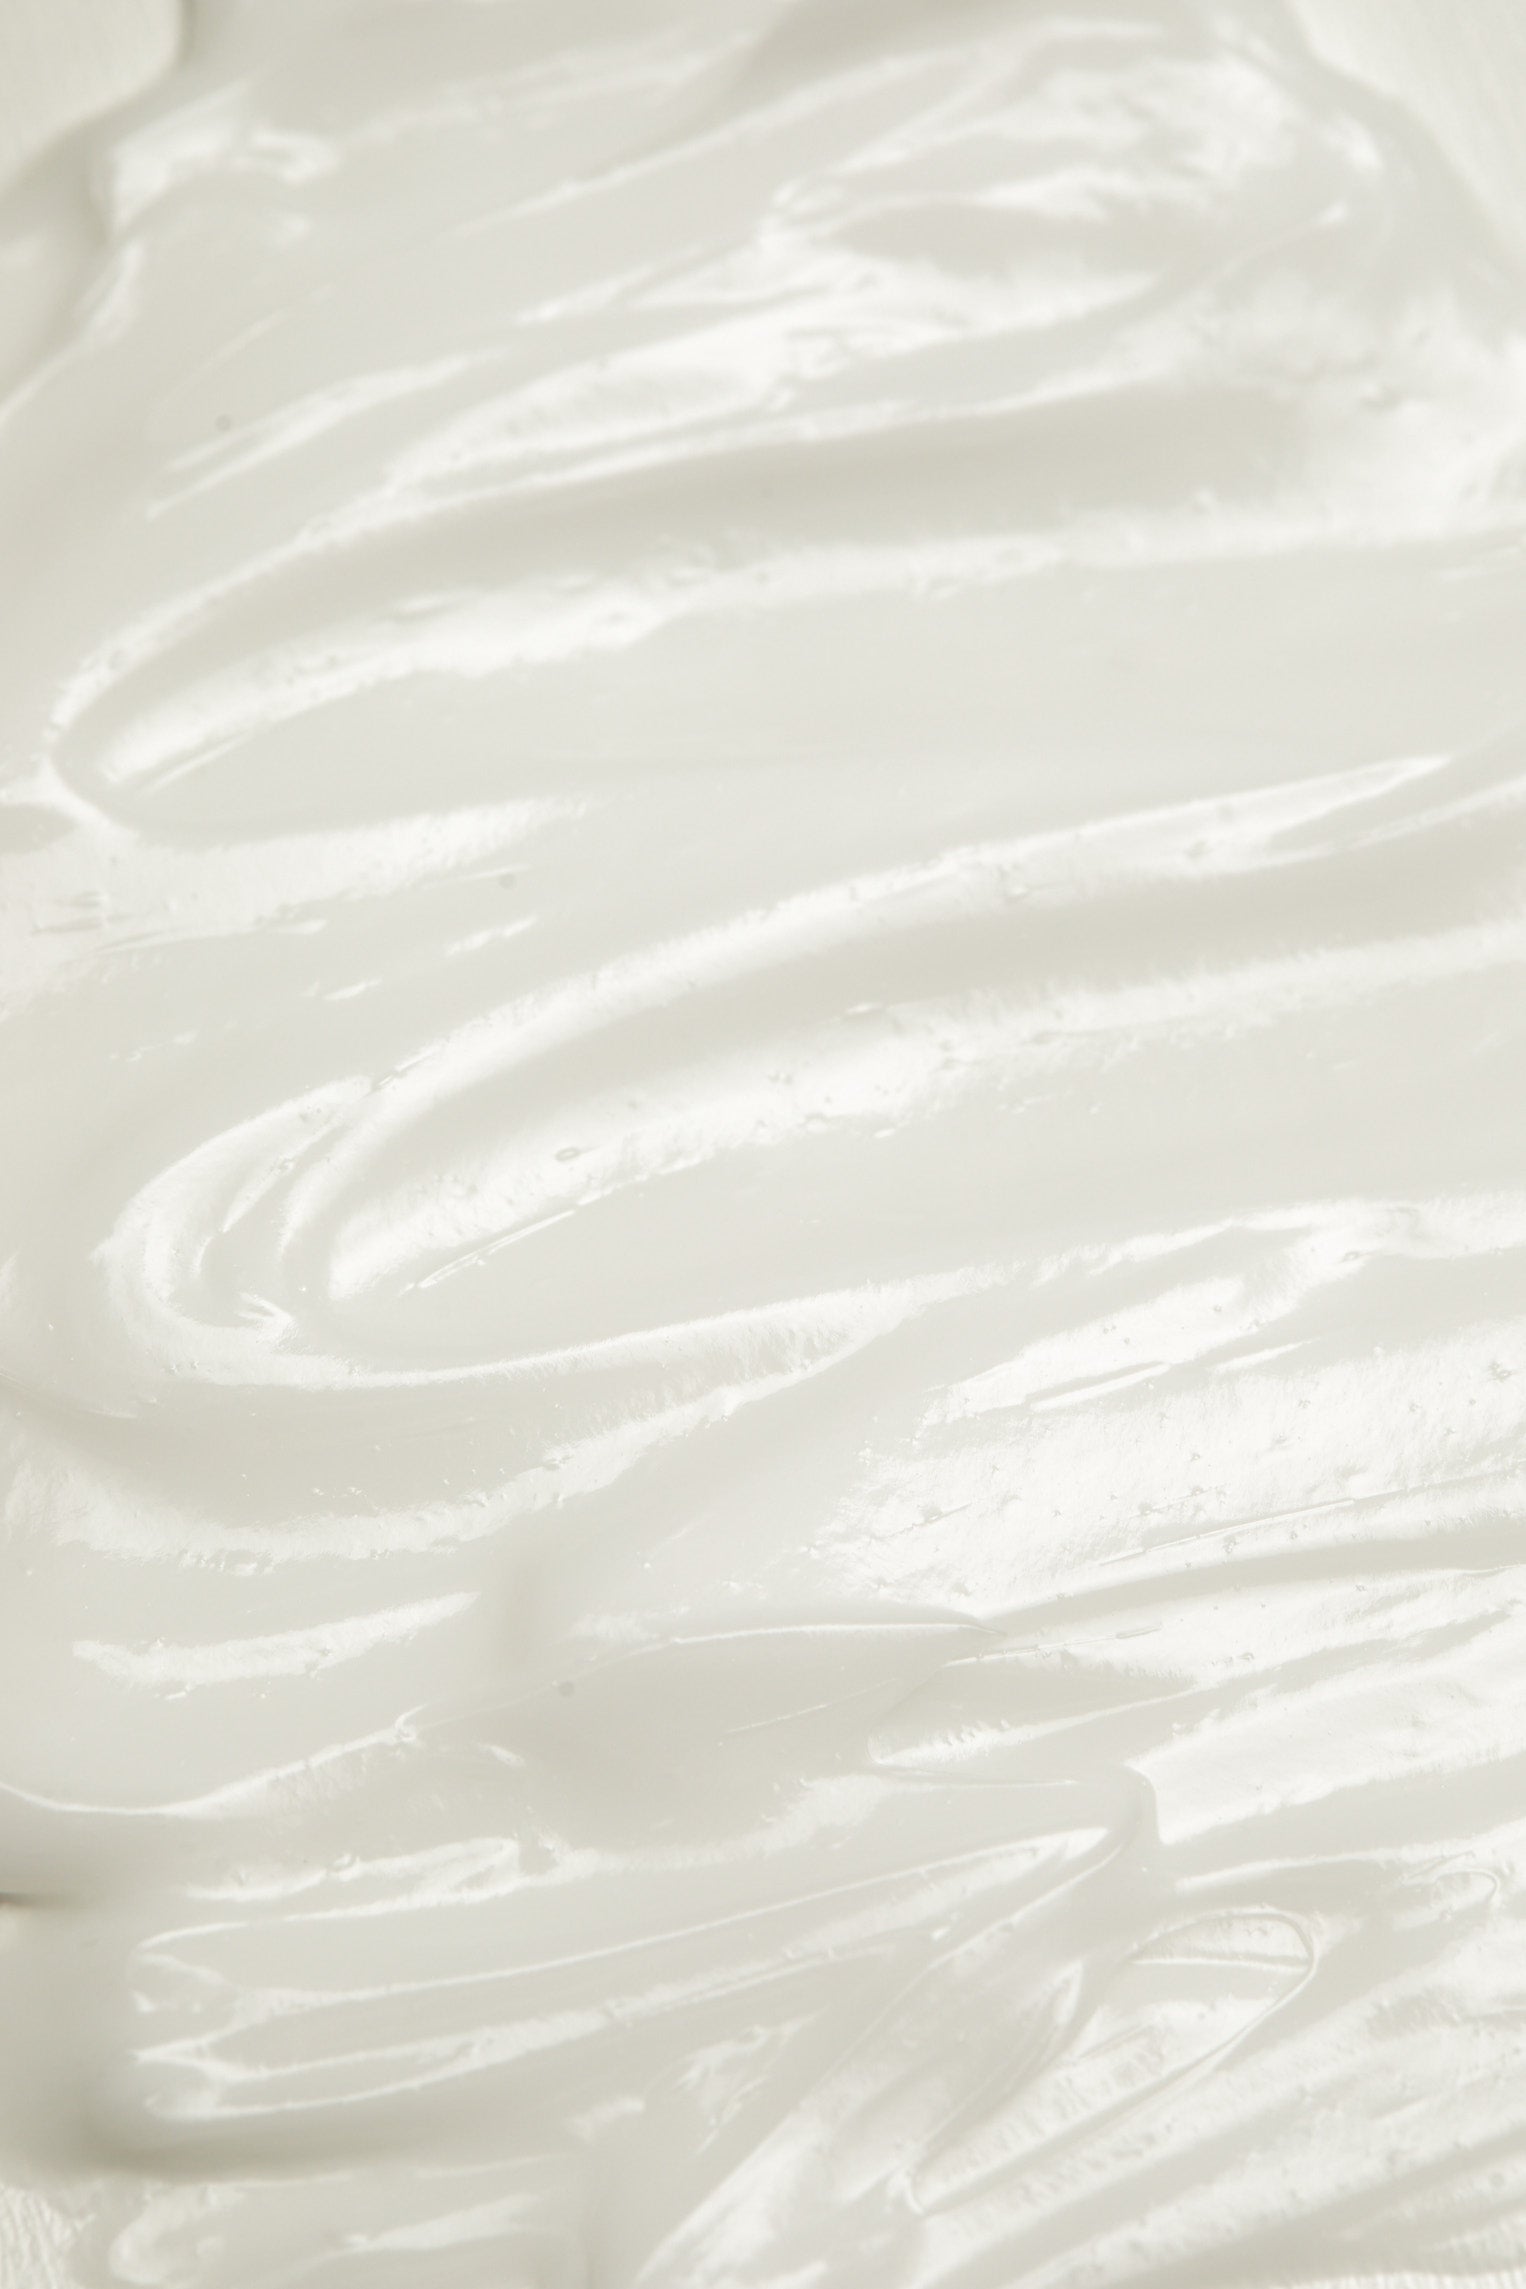 SolRay Beauty's Niacinamide Face Brightening Cream - The cream has a smooth creamy texture.